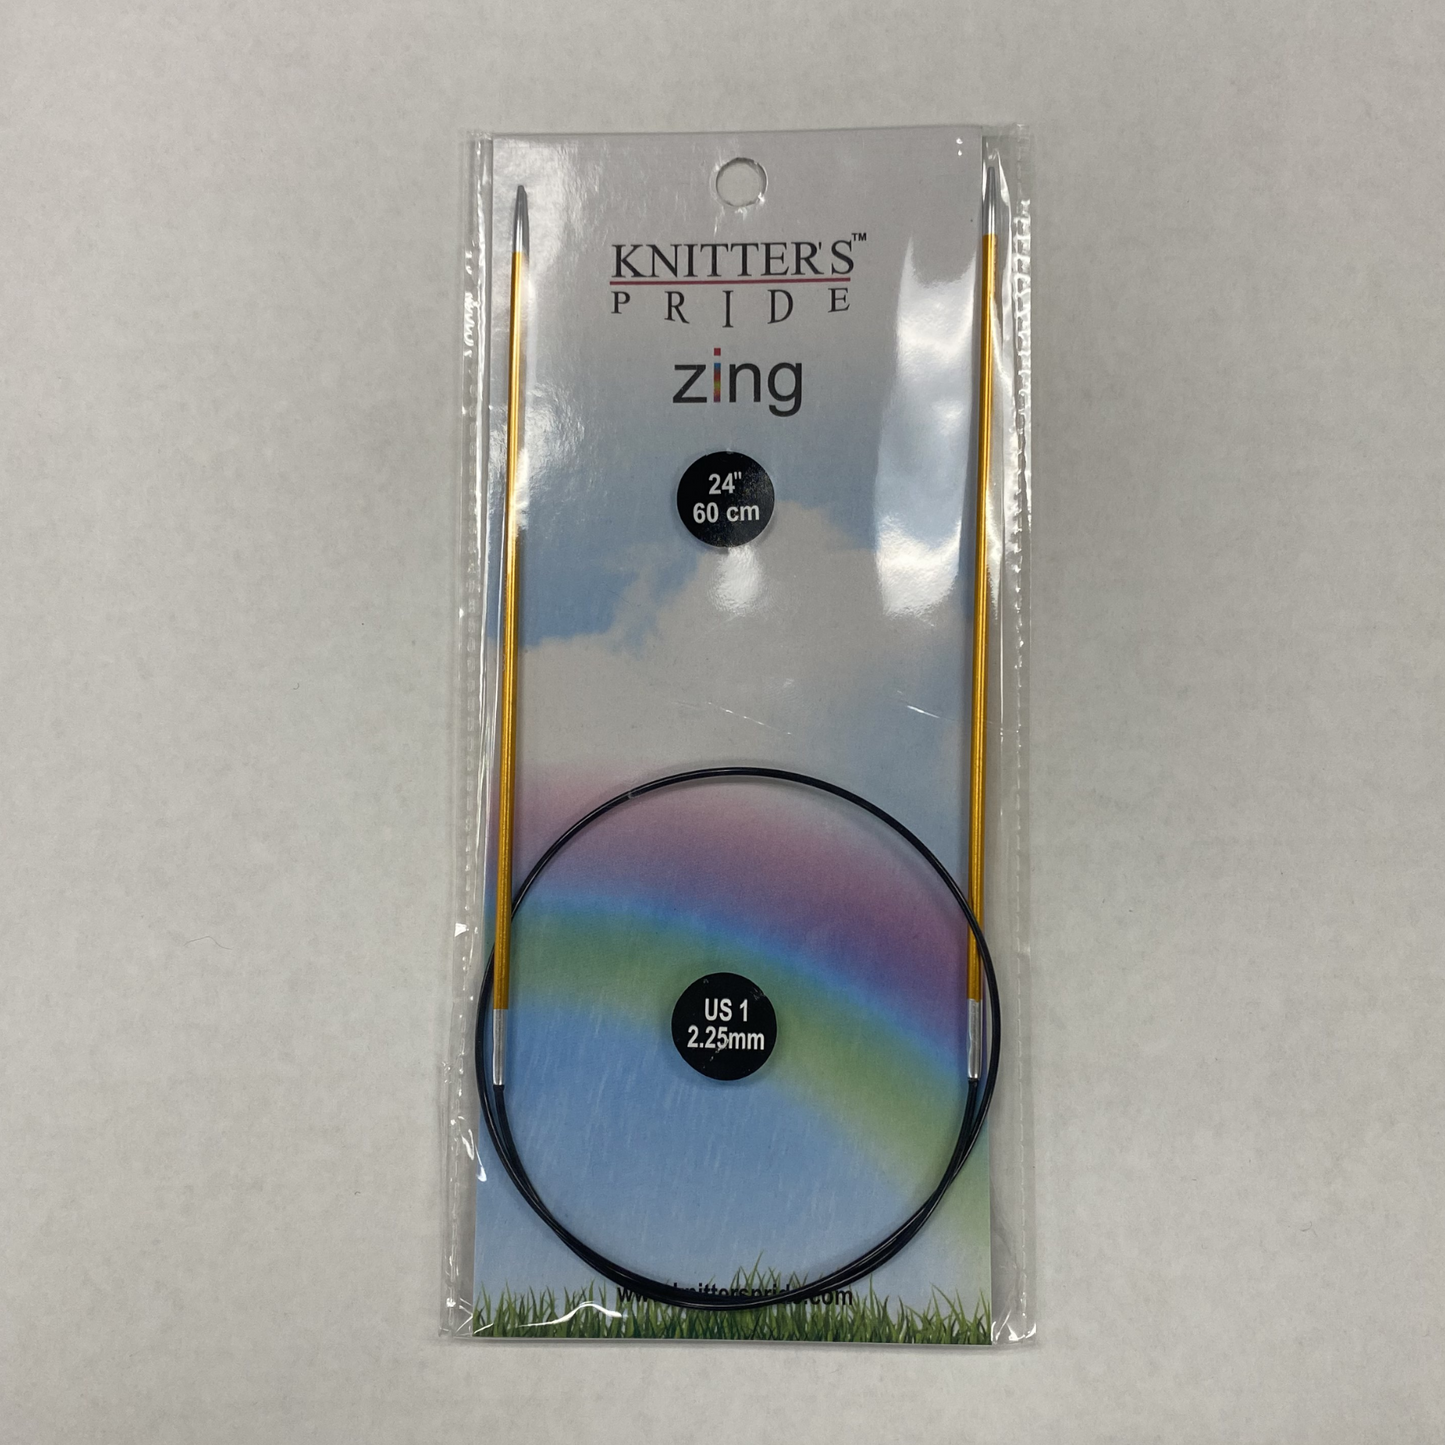 Knitter's Pride - Zing - US 1 / 2.25mm Fixed Circular Needles